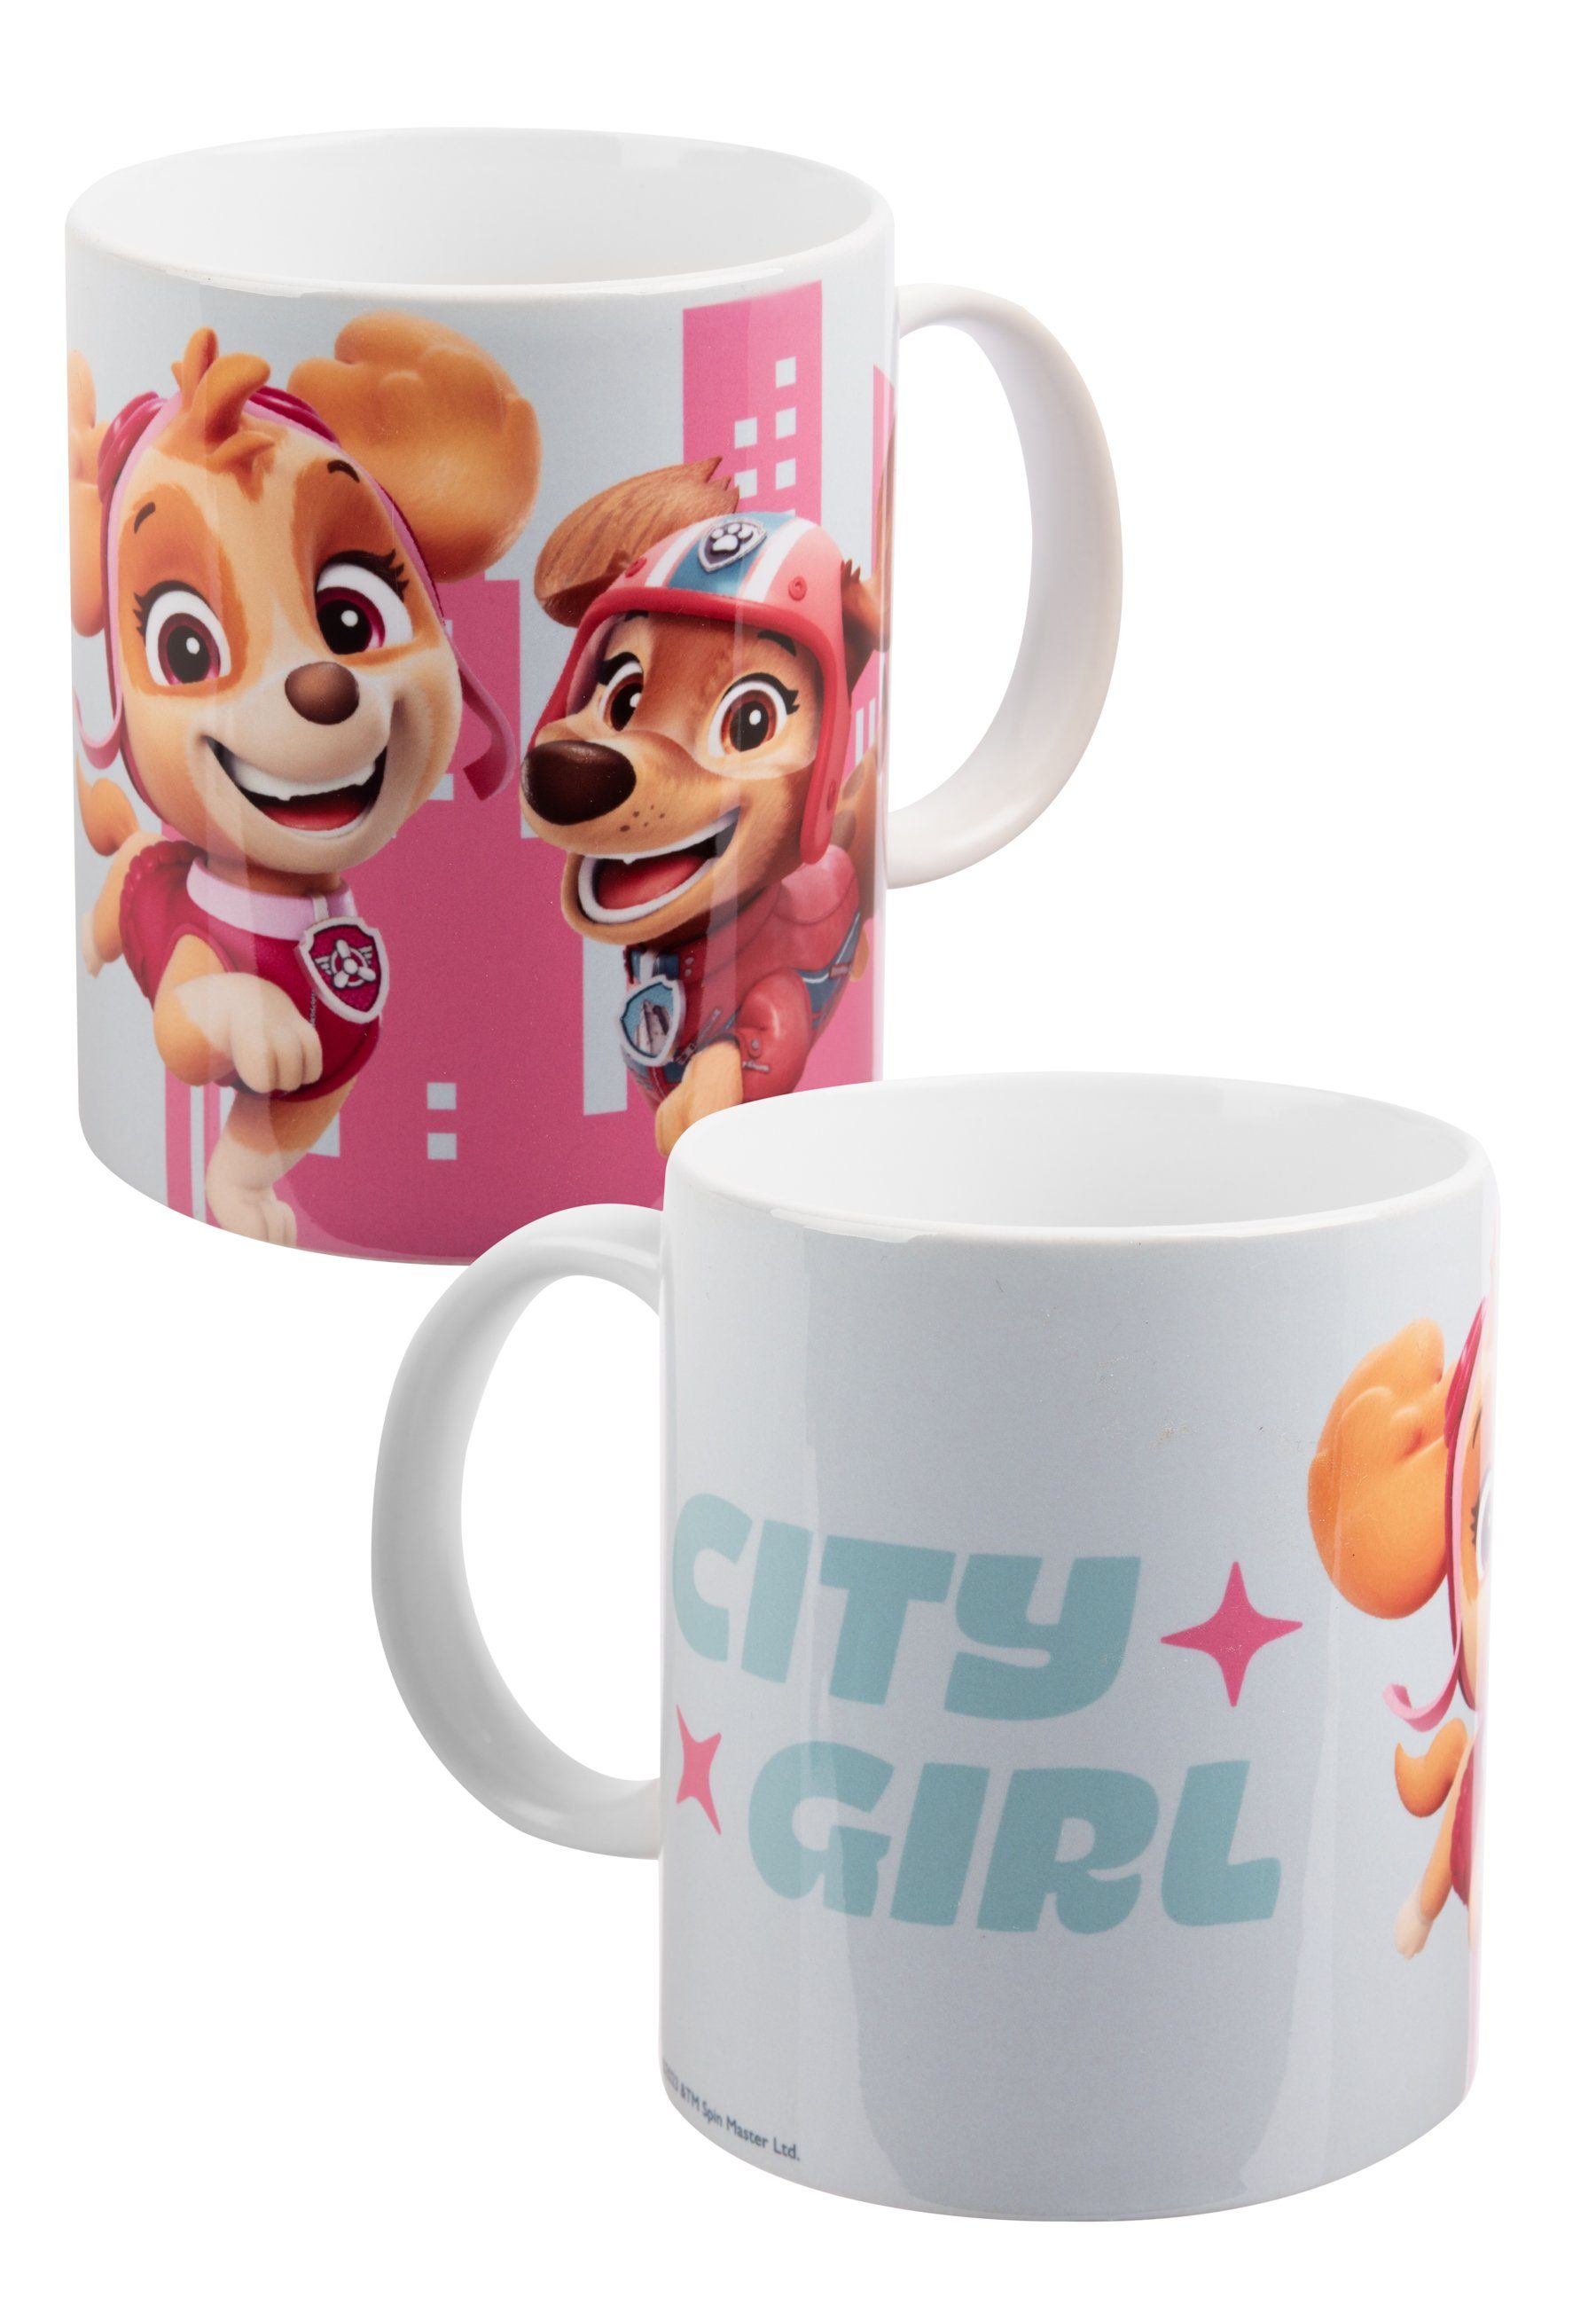 United Labels® Tasse Paw Patrol Tasse - City Girl - Kaffeetasse aus Keramik 320 ml, Keramik